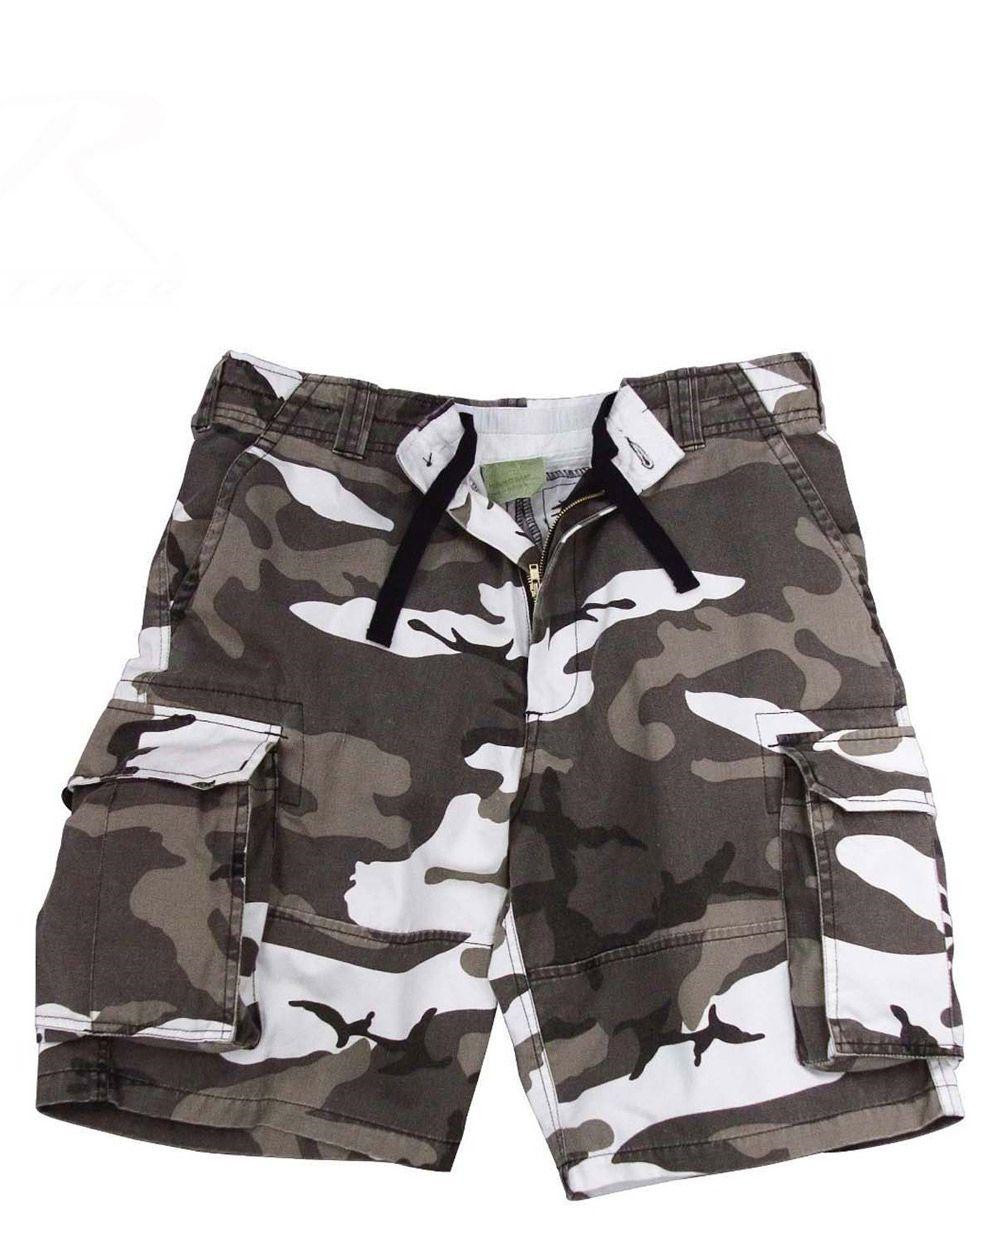 Rothco Cargo shorts (Urban Camo, L)